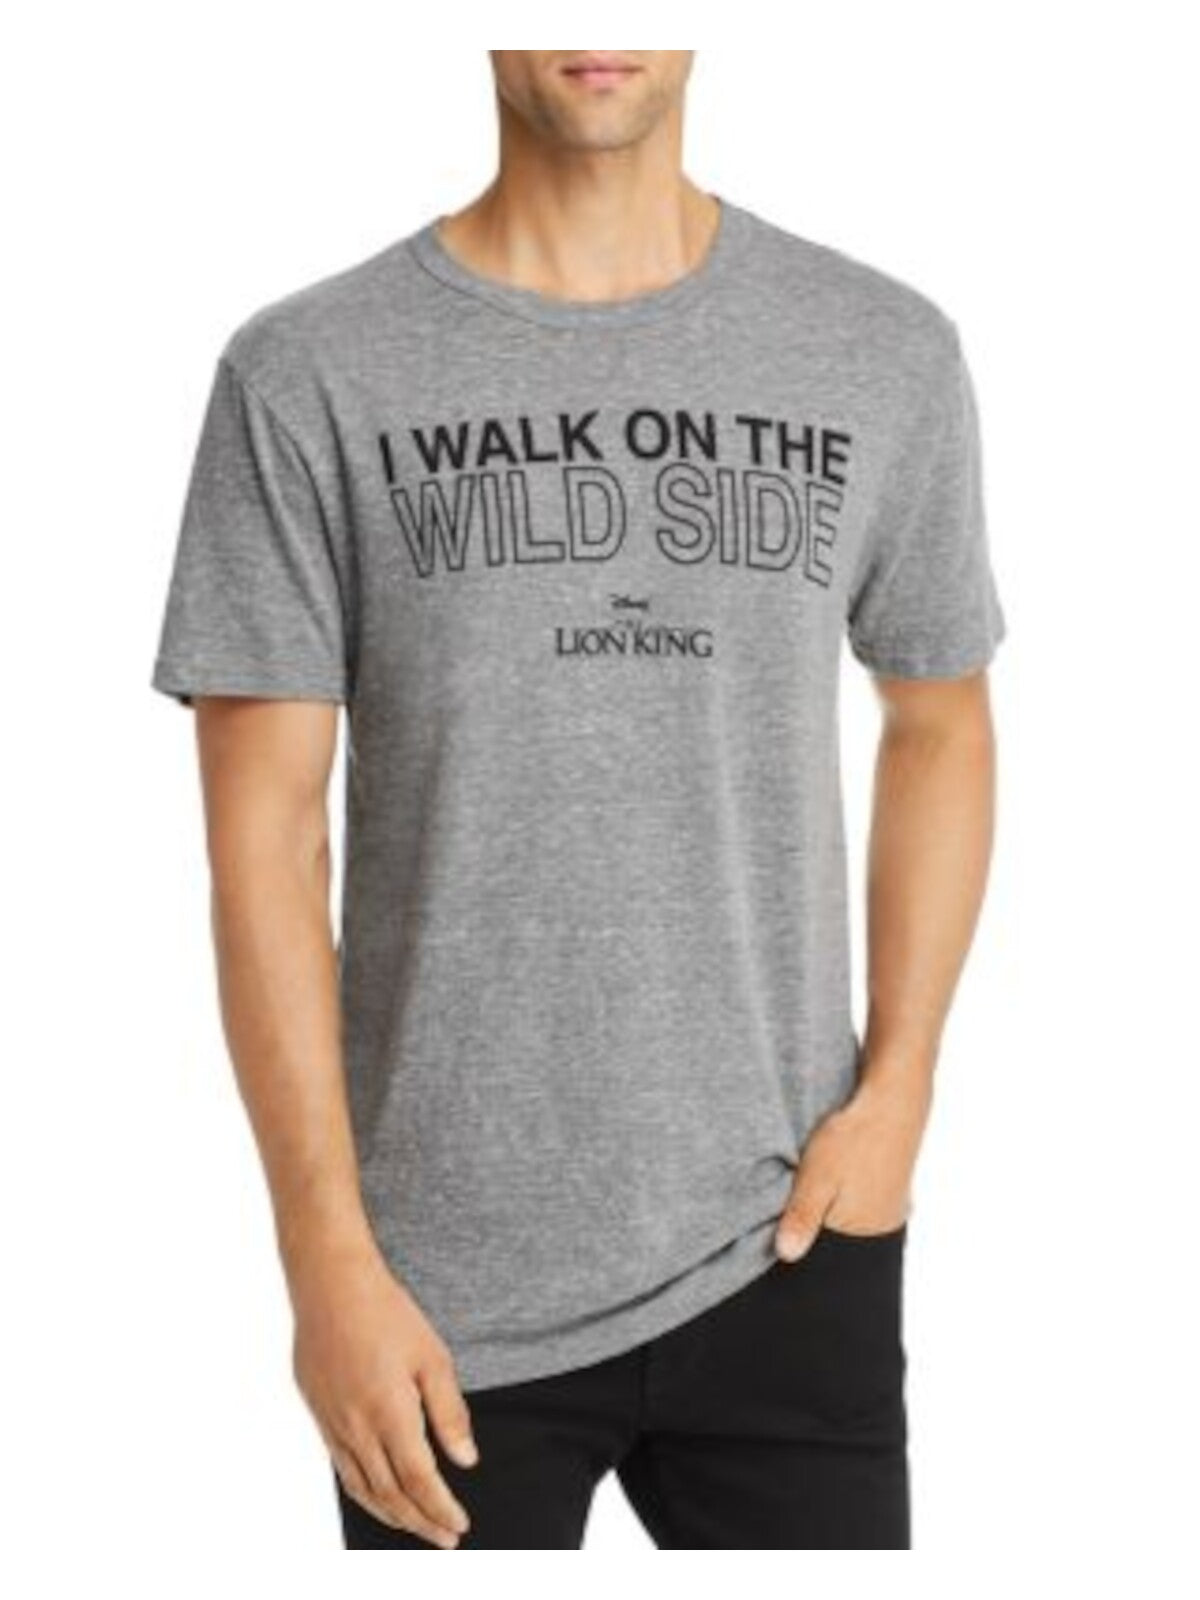 HYBRID APPAREL Mens Gray Lightweight, Logo Graphic Classic Fit T-Shirt XL